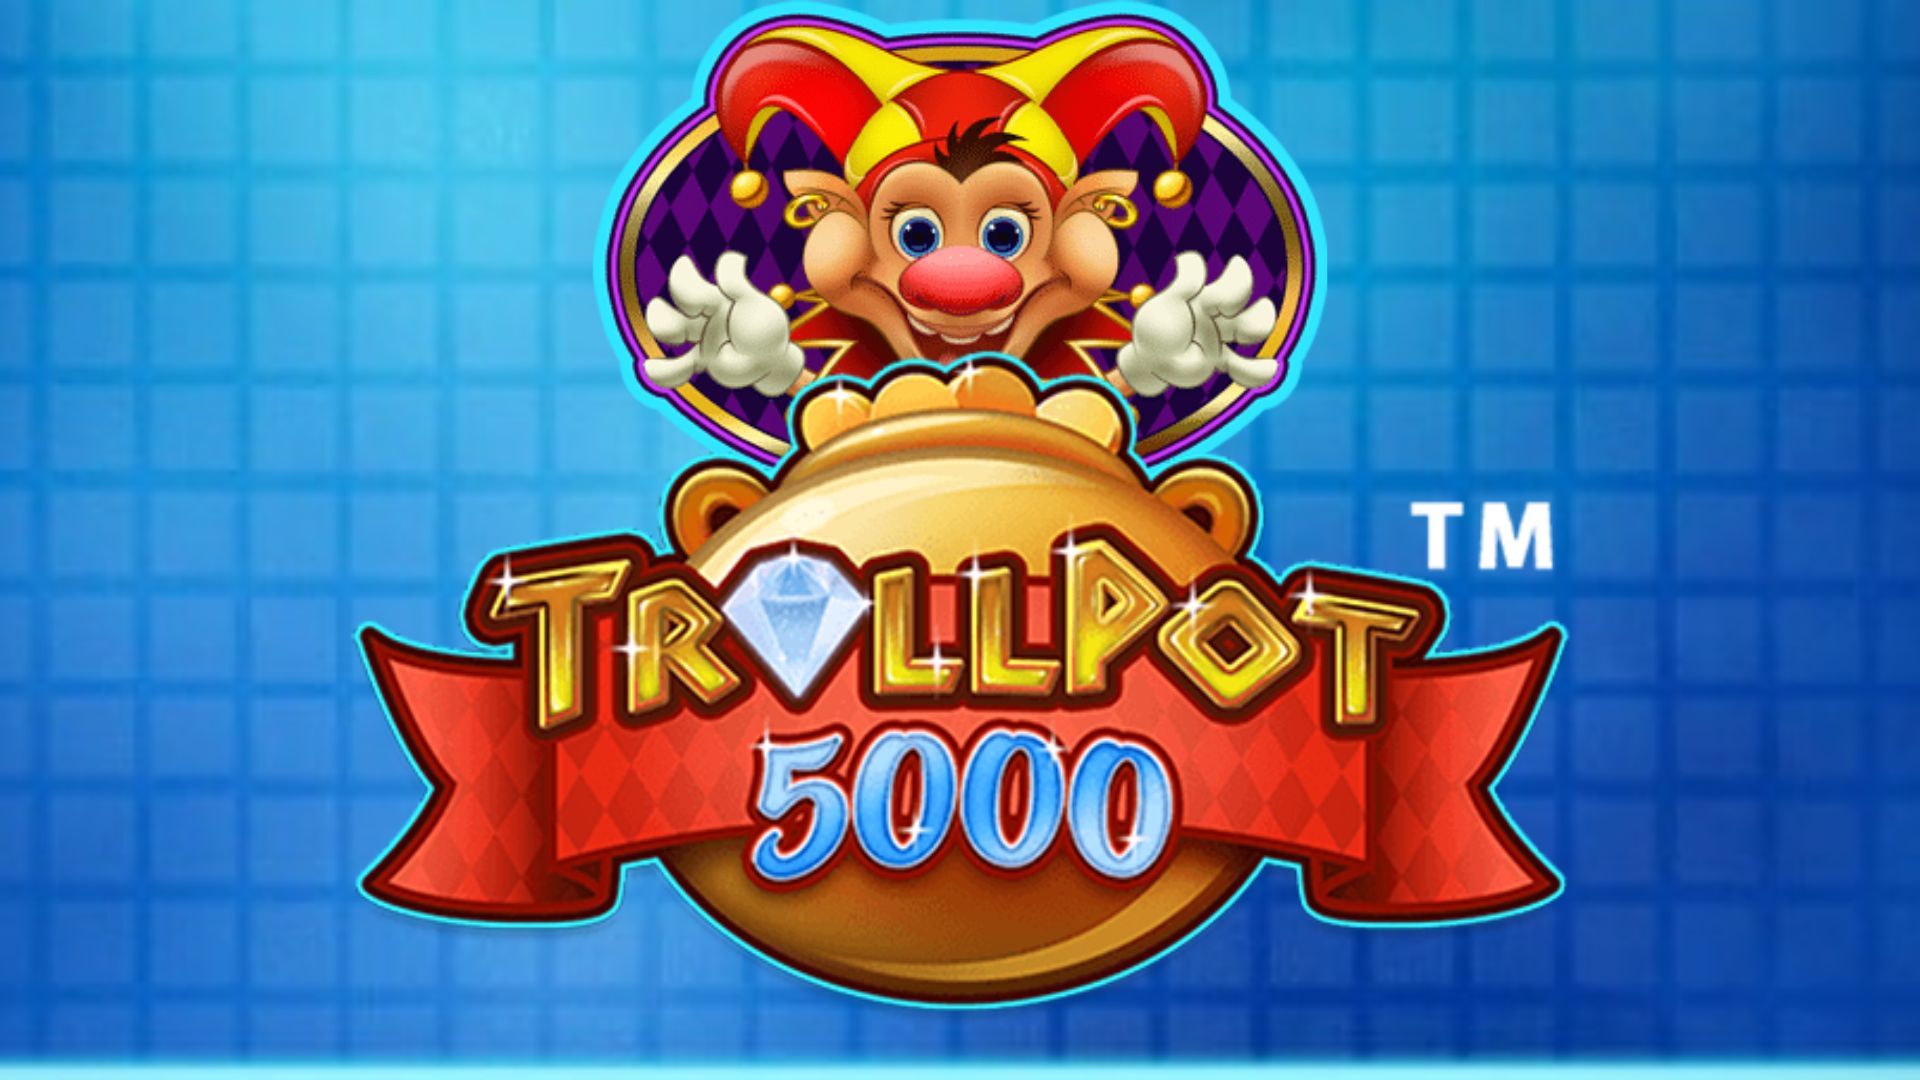 game review slot online trollpot 5000